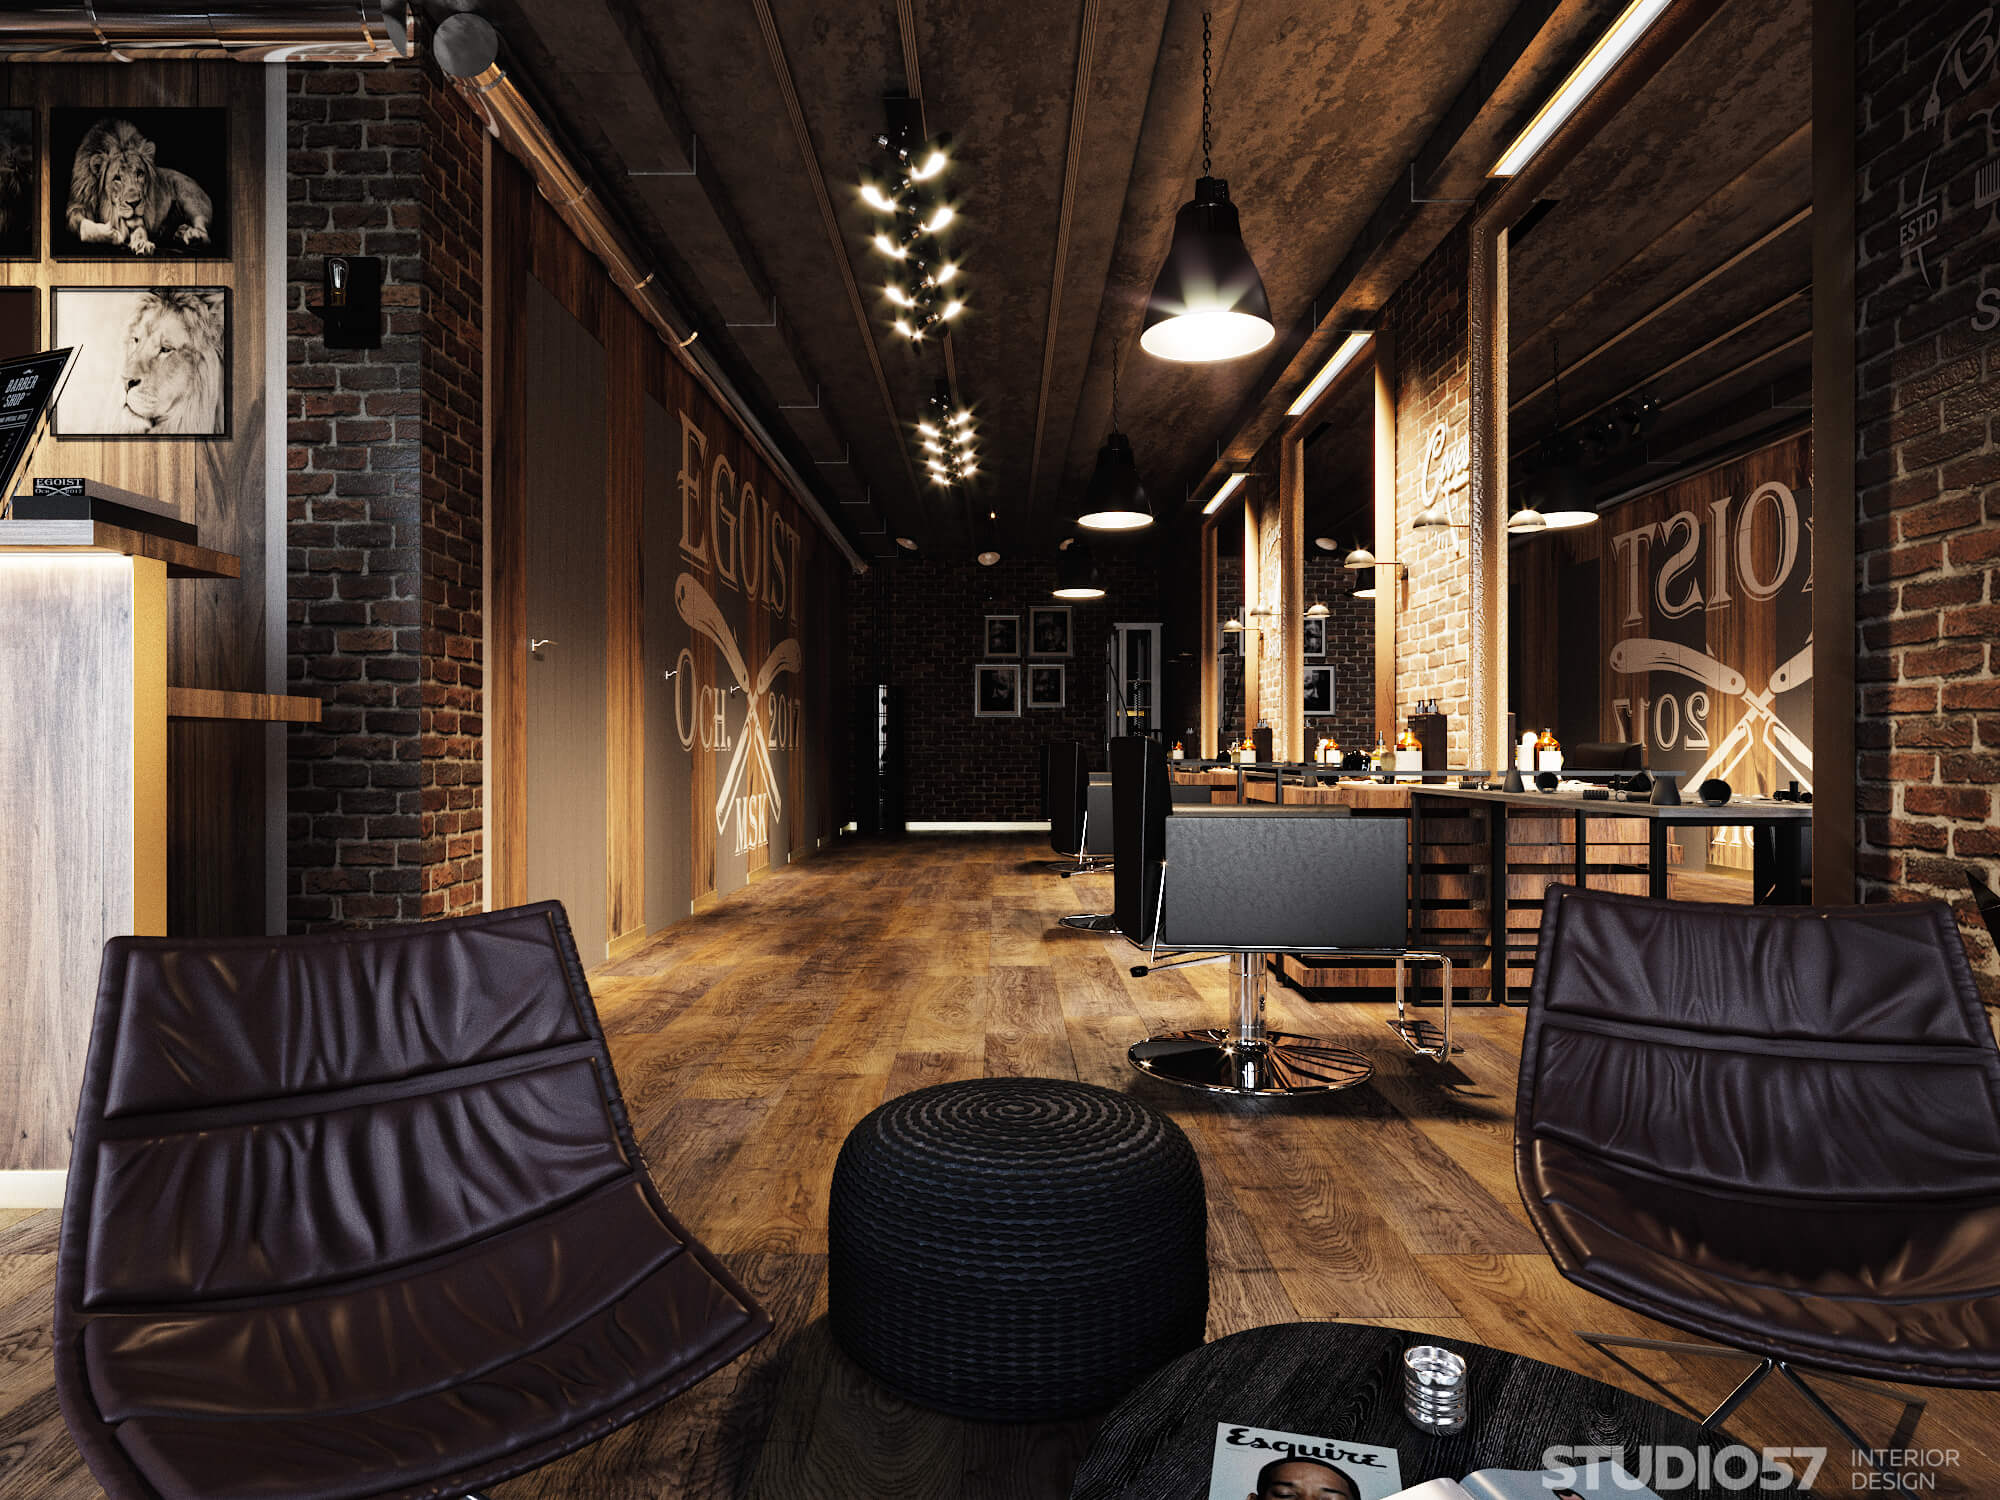 Beautiful interior of the barbershop